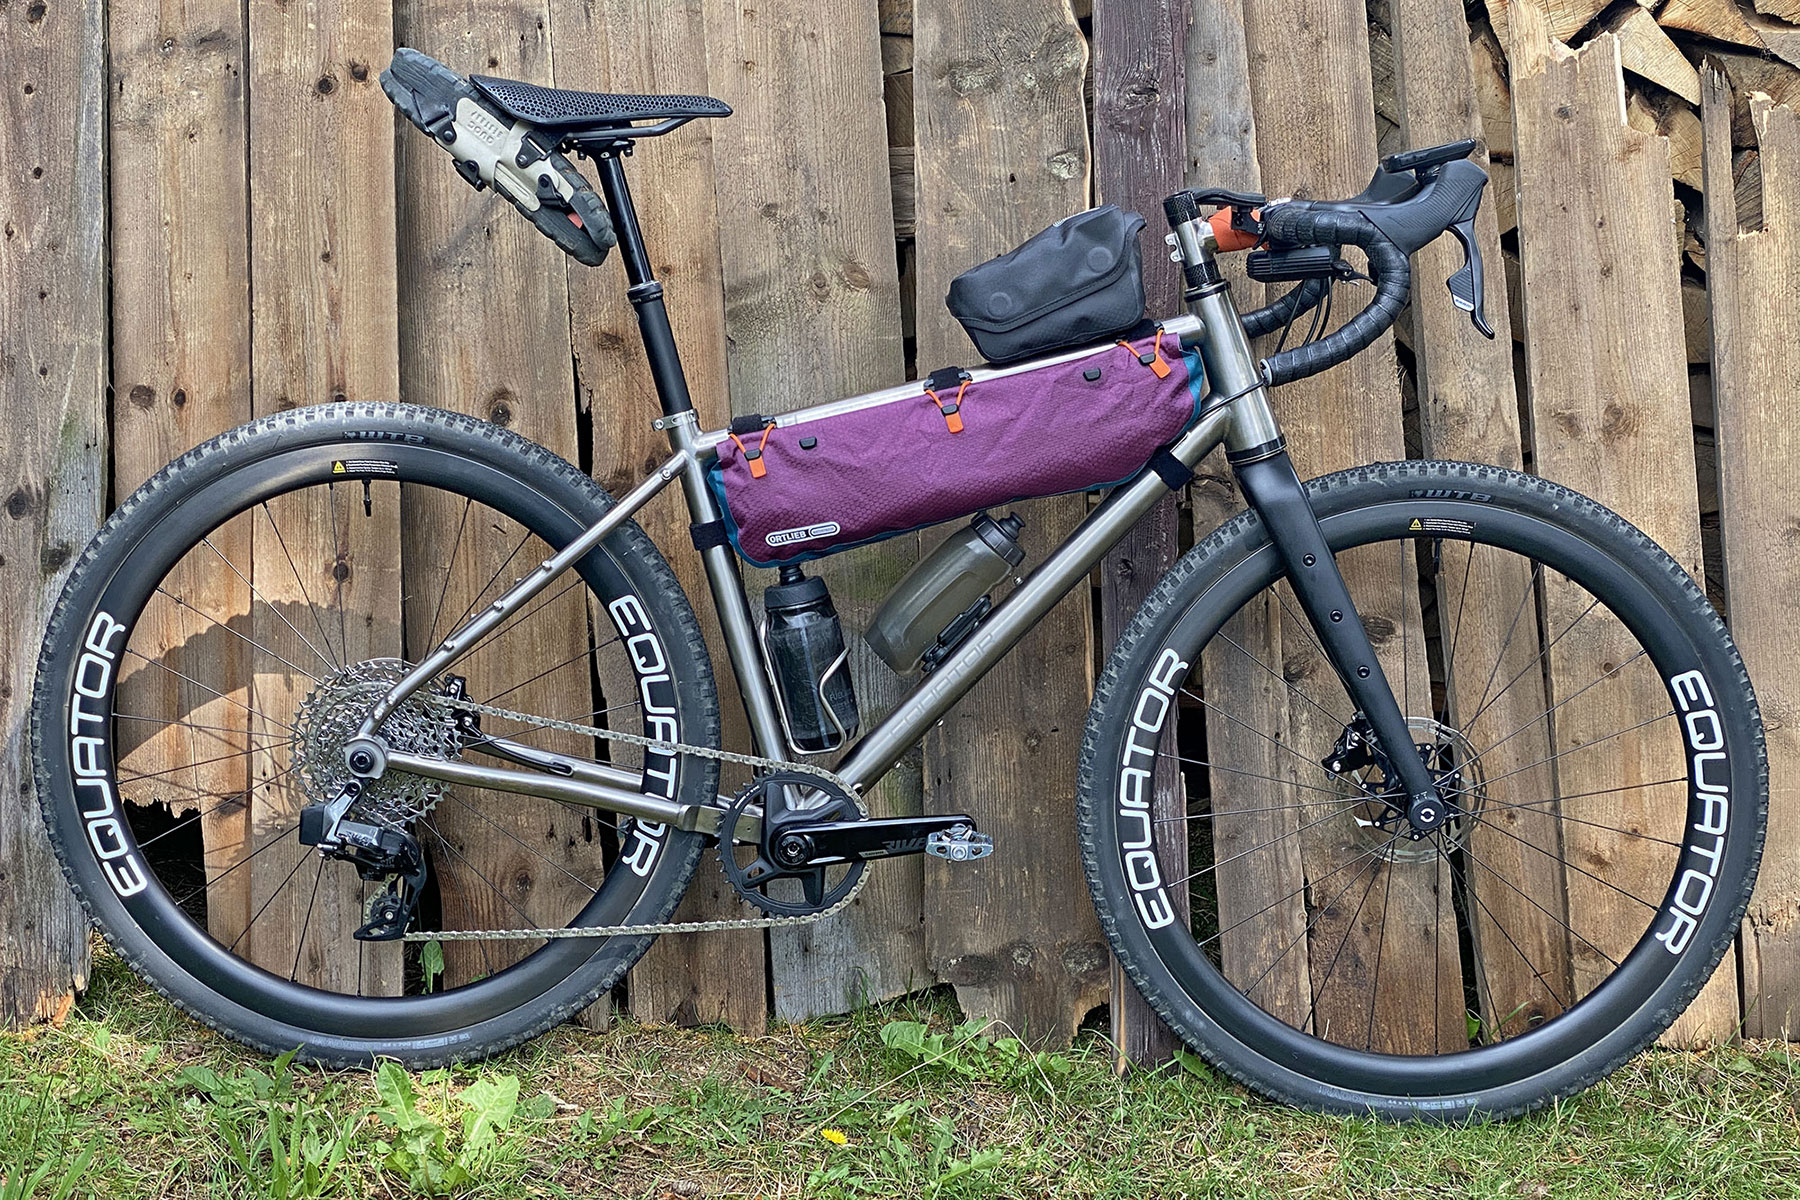 Equator Yasei titanium affordable gravel bike review, fast-packing light bikepacking